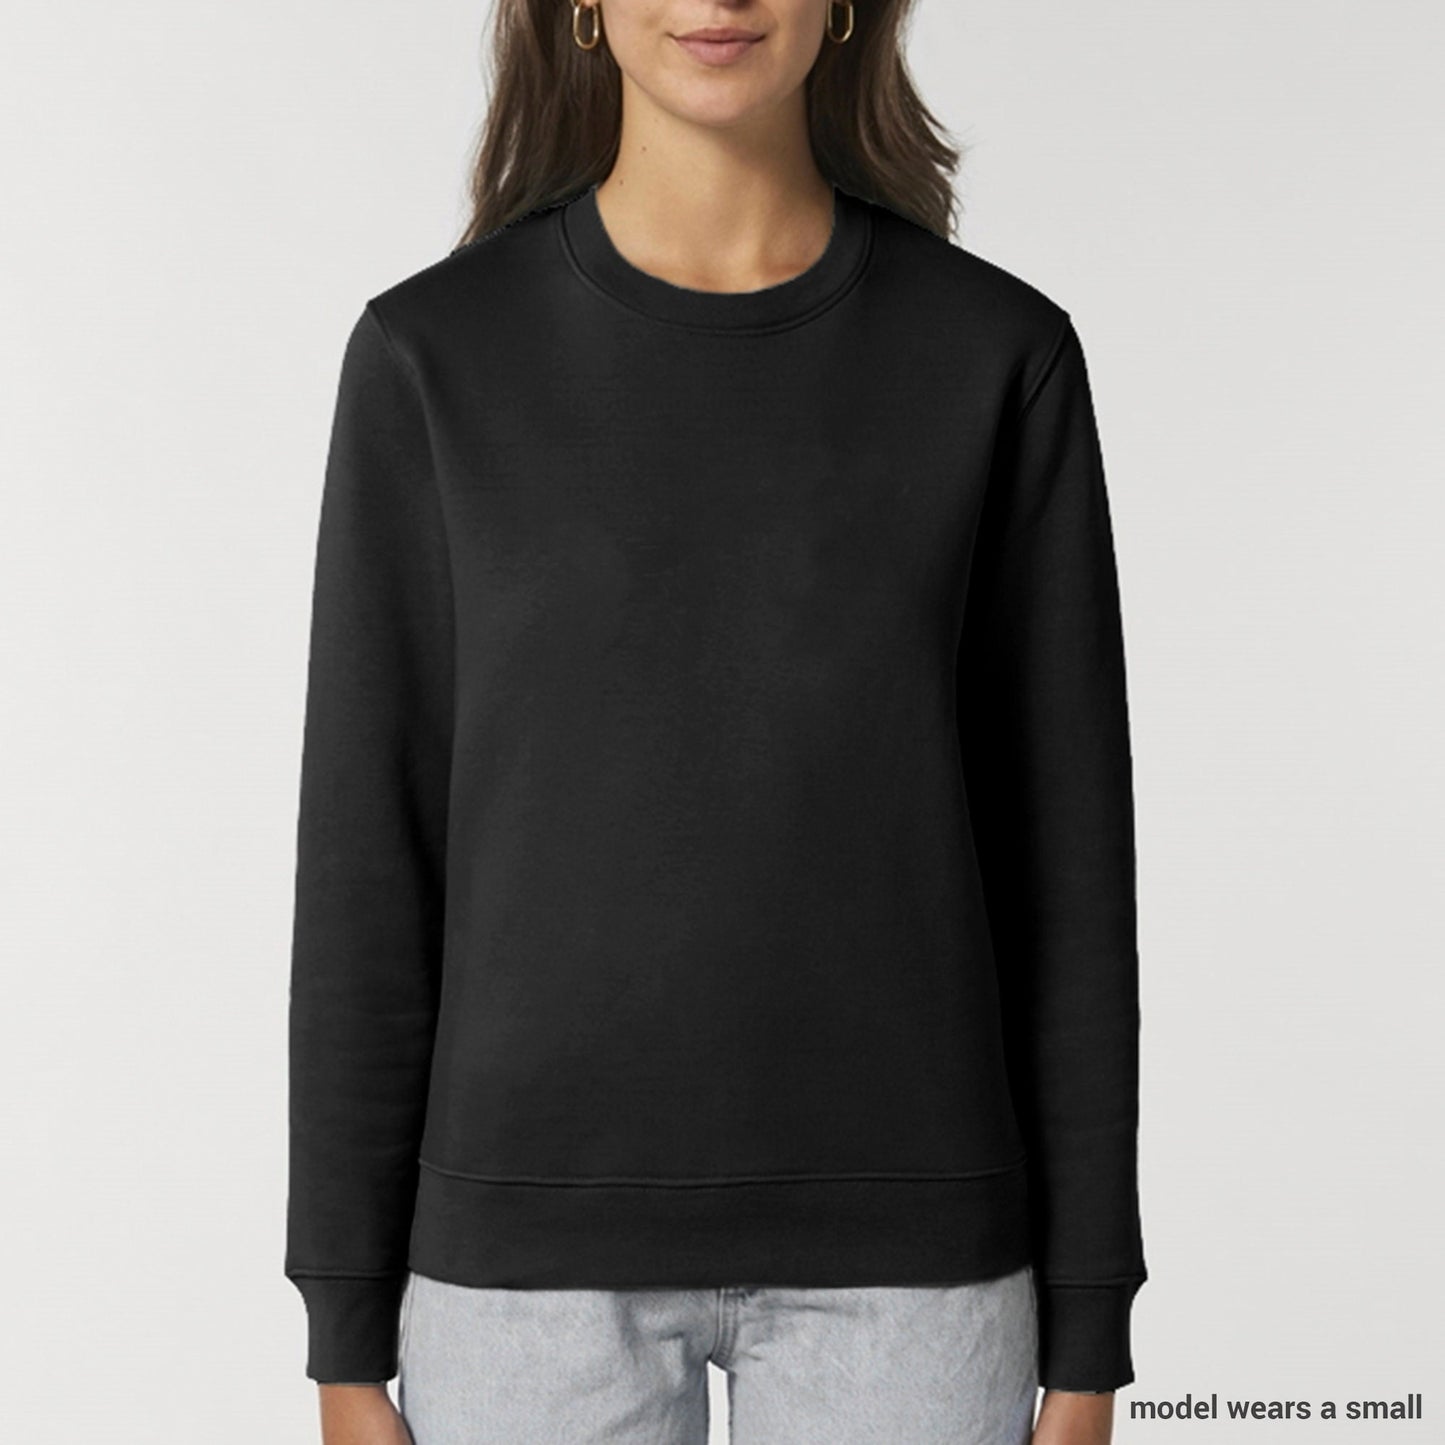 Personalised Funtie Sweatshirt - Funtie Definition Sweater - Fun Auntie Shirt - Cool Aunt Sweatshirt - Favorite Auntie Best Aunt Ever